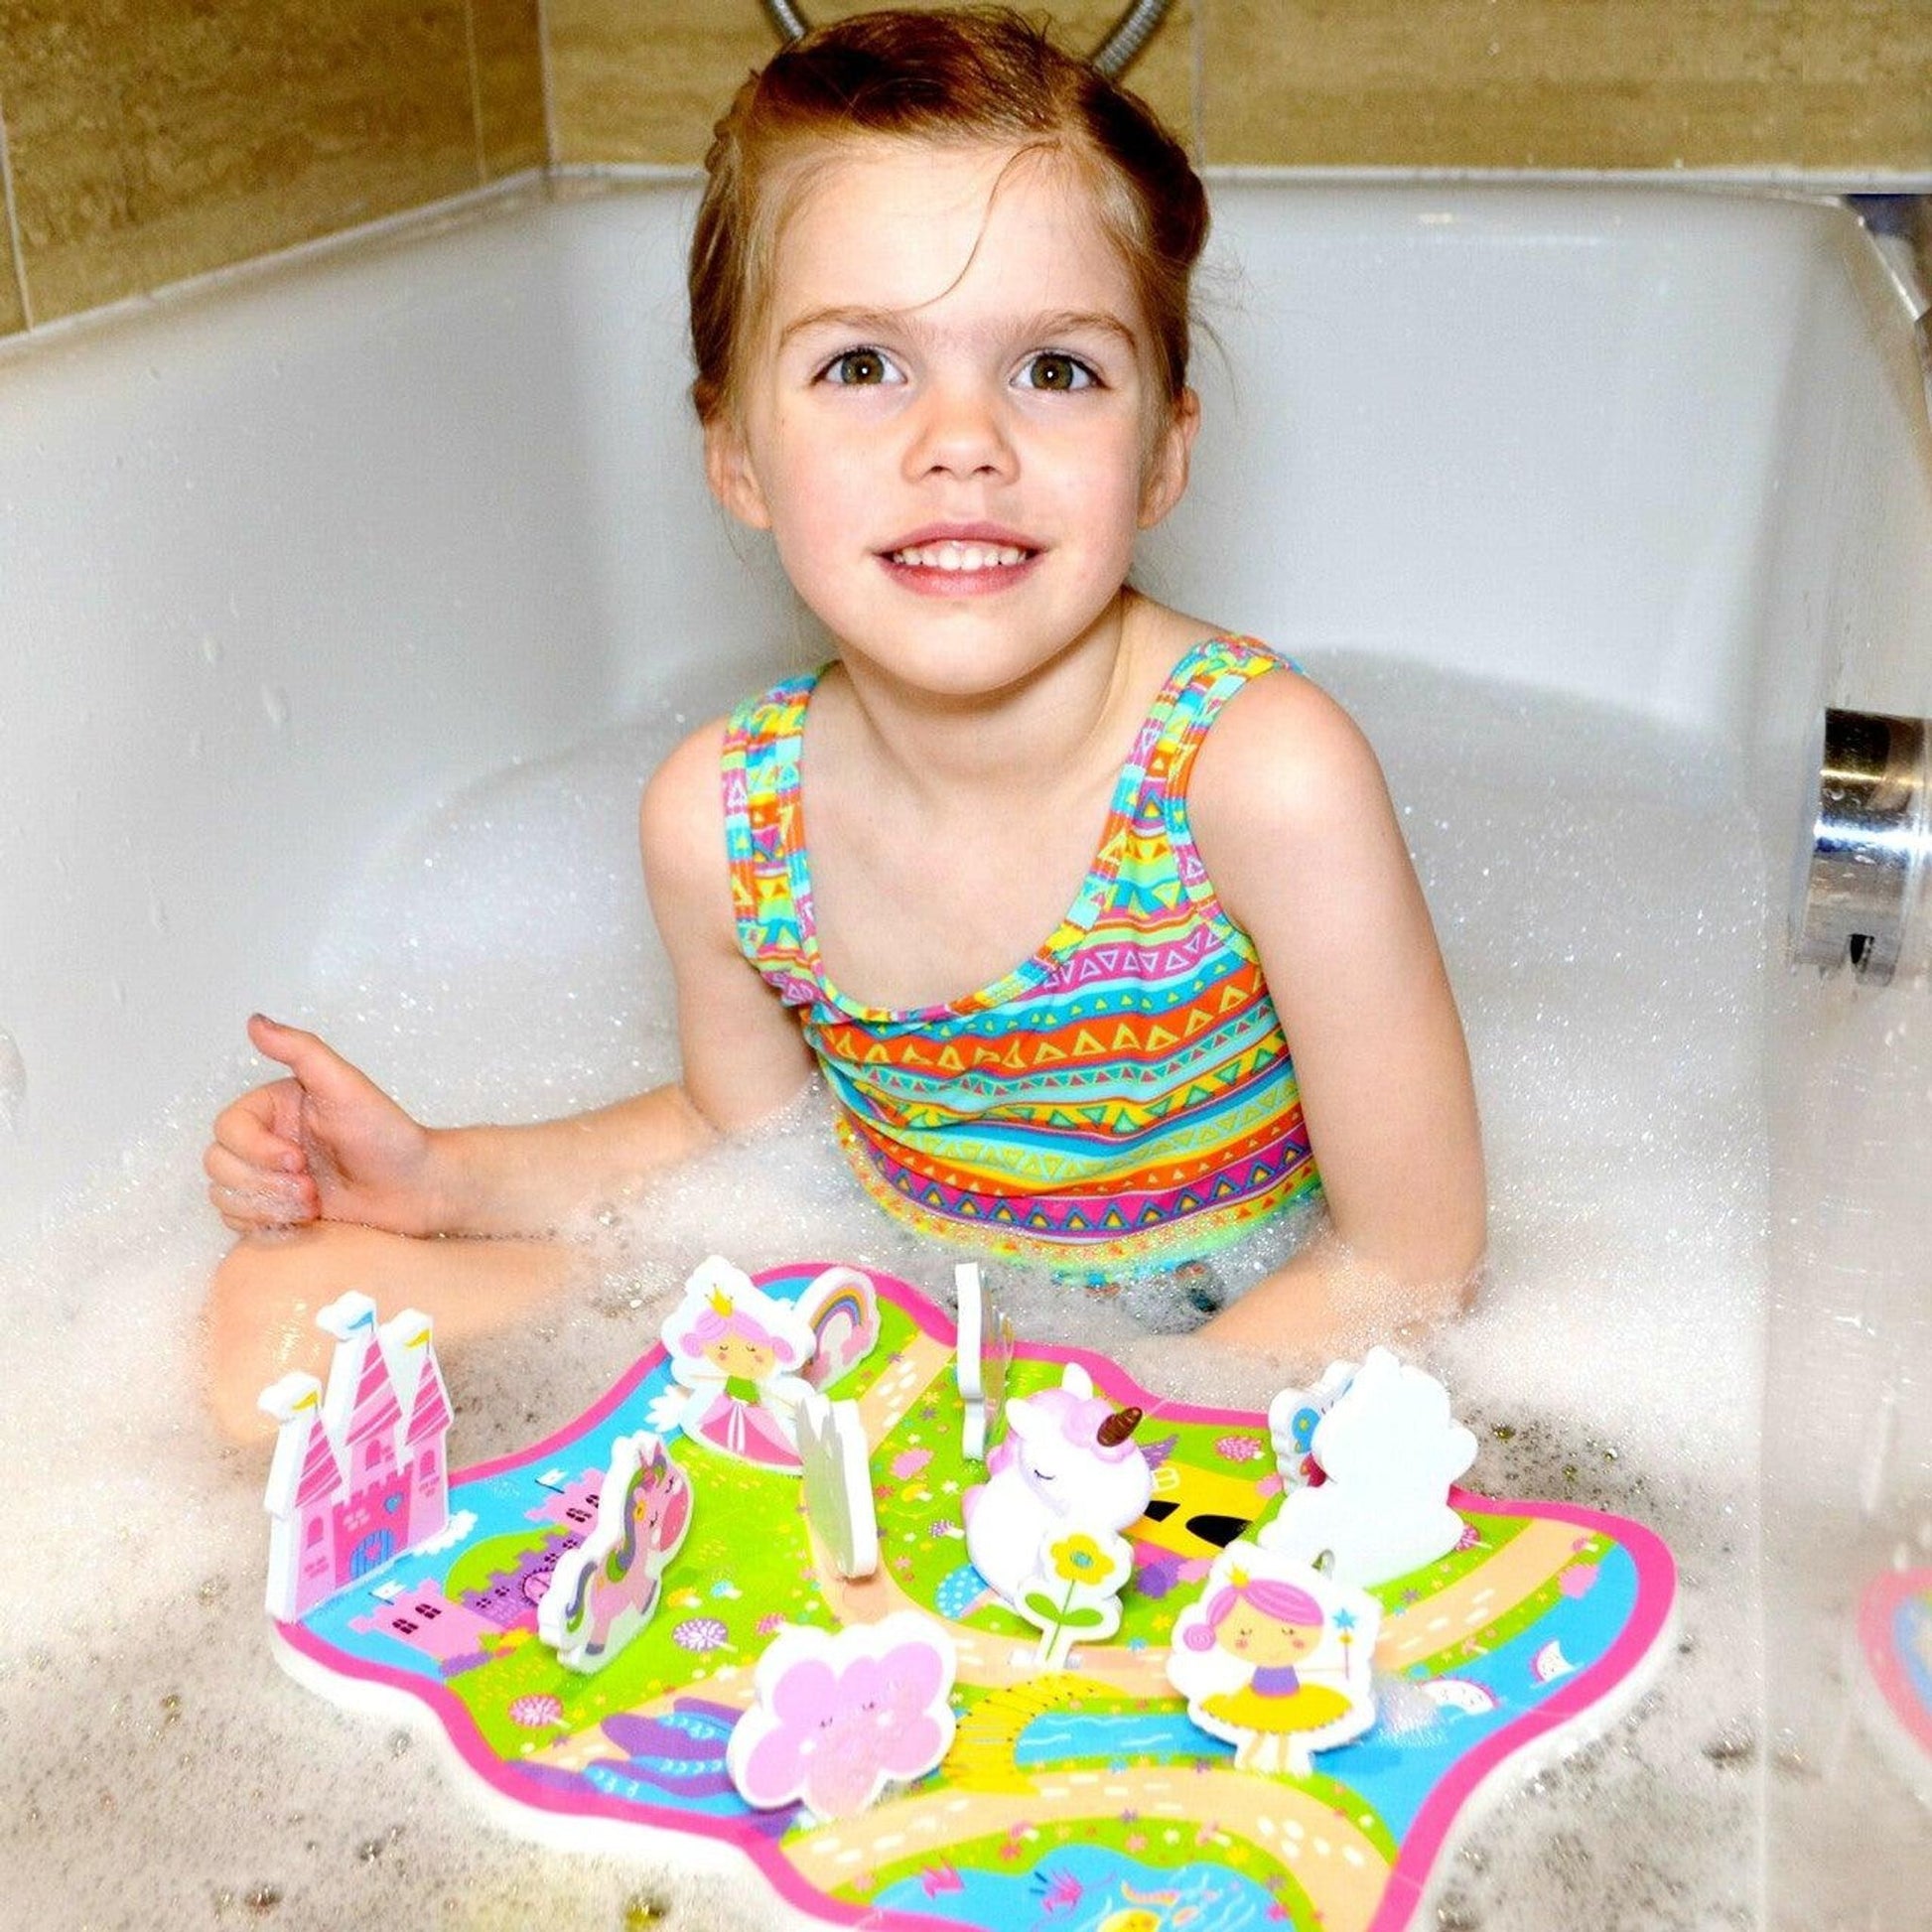 Bath Time Unicorn World - Toybox Tales